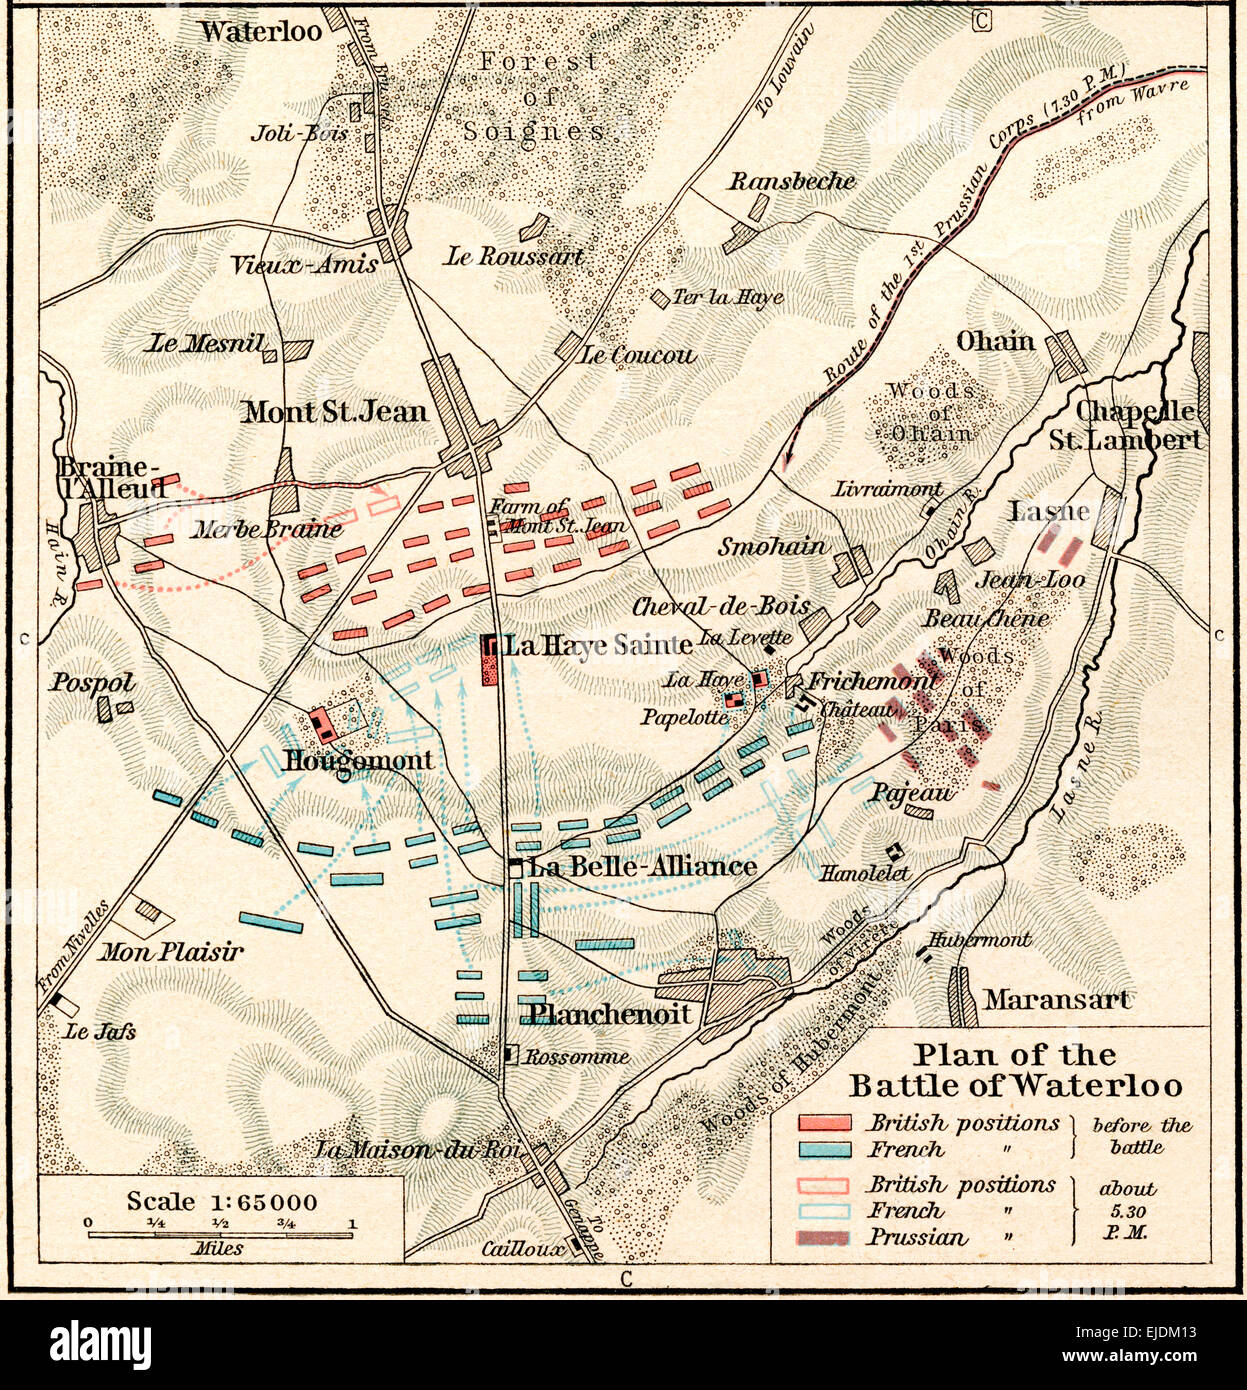 Plan de la bataille de Waterloo, du 16 au 18 juin 1815. Atlas